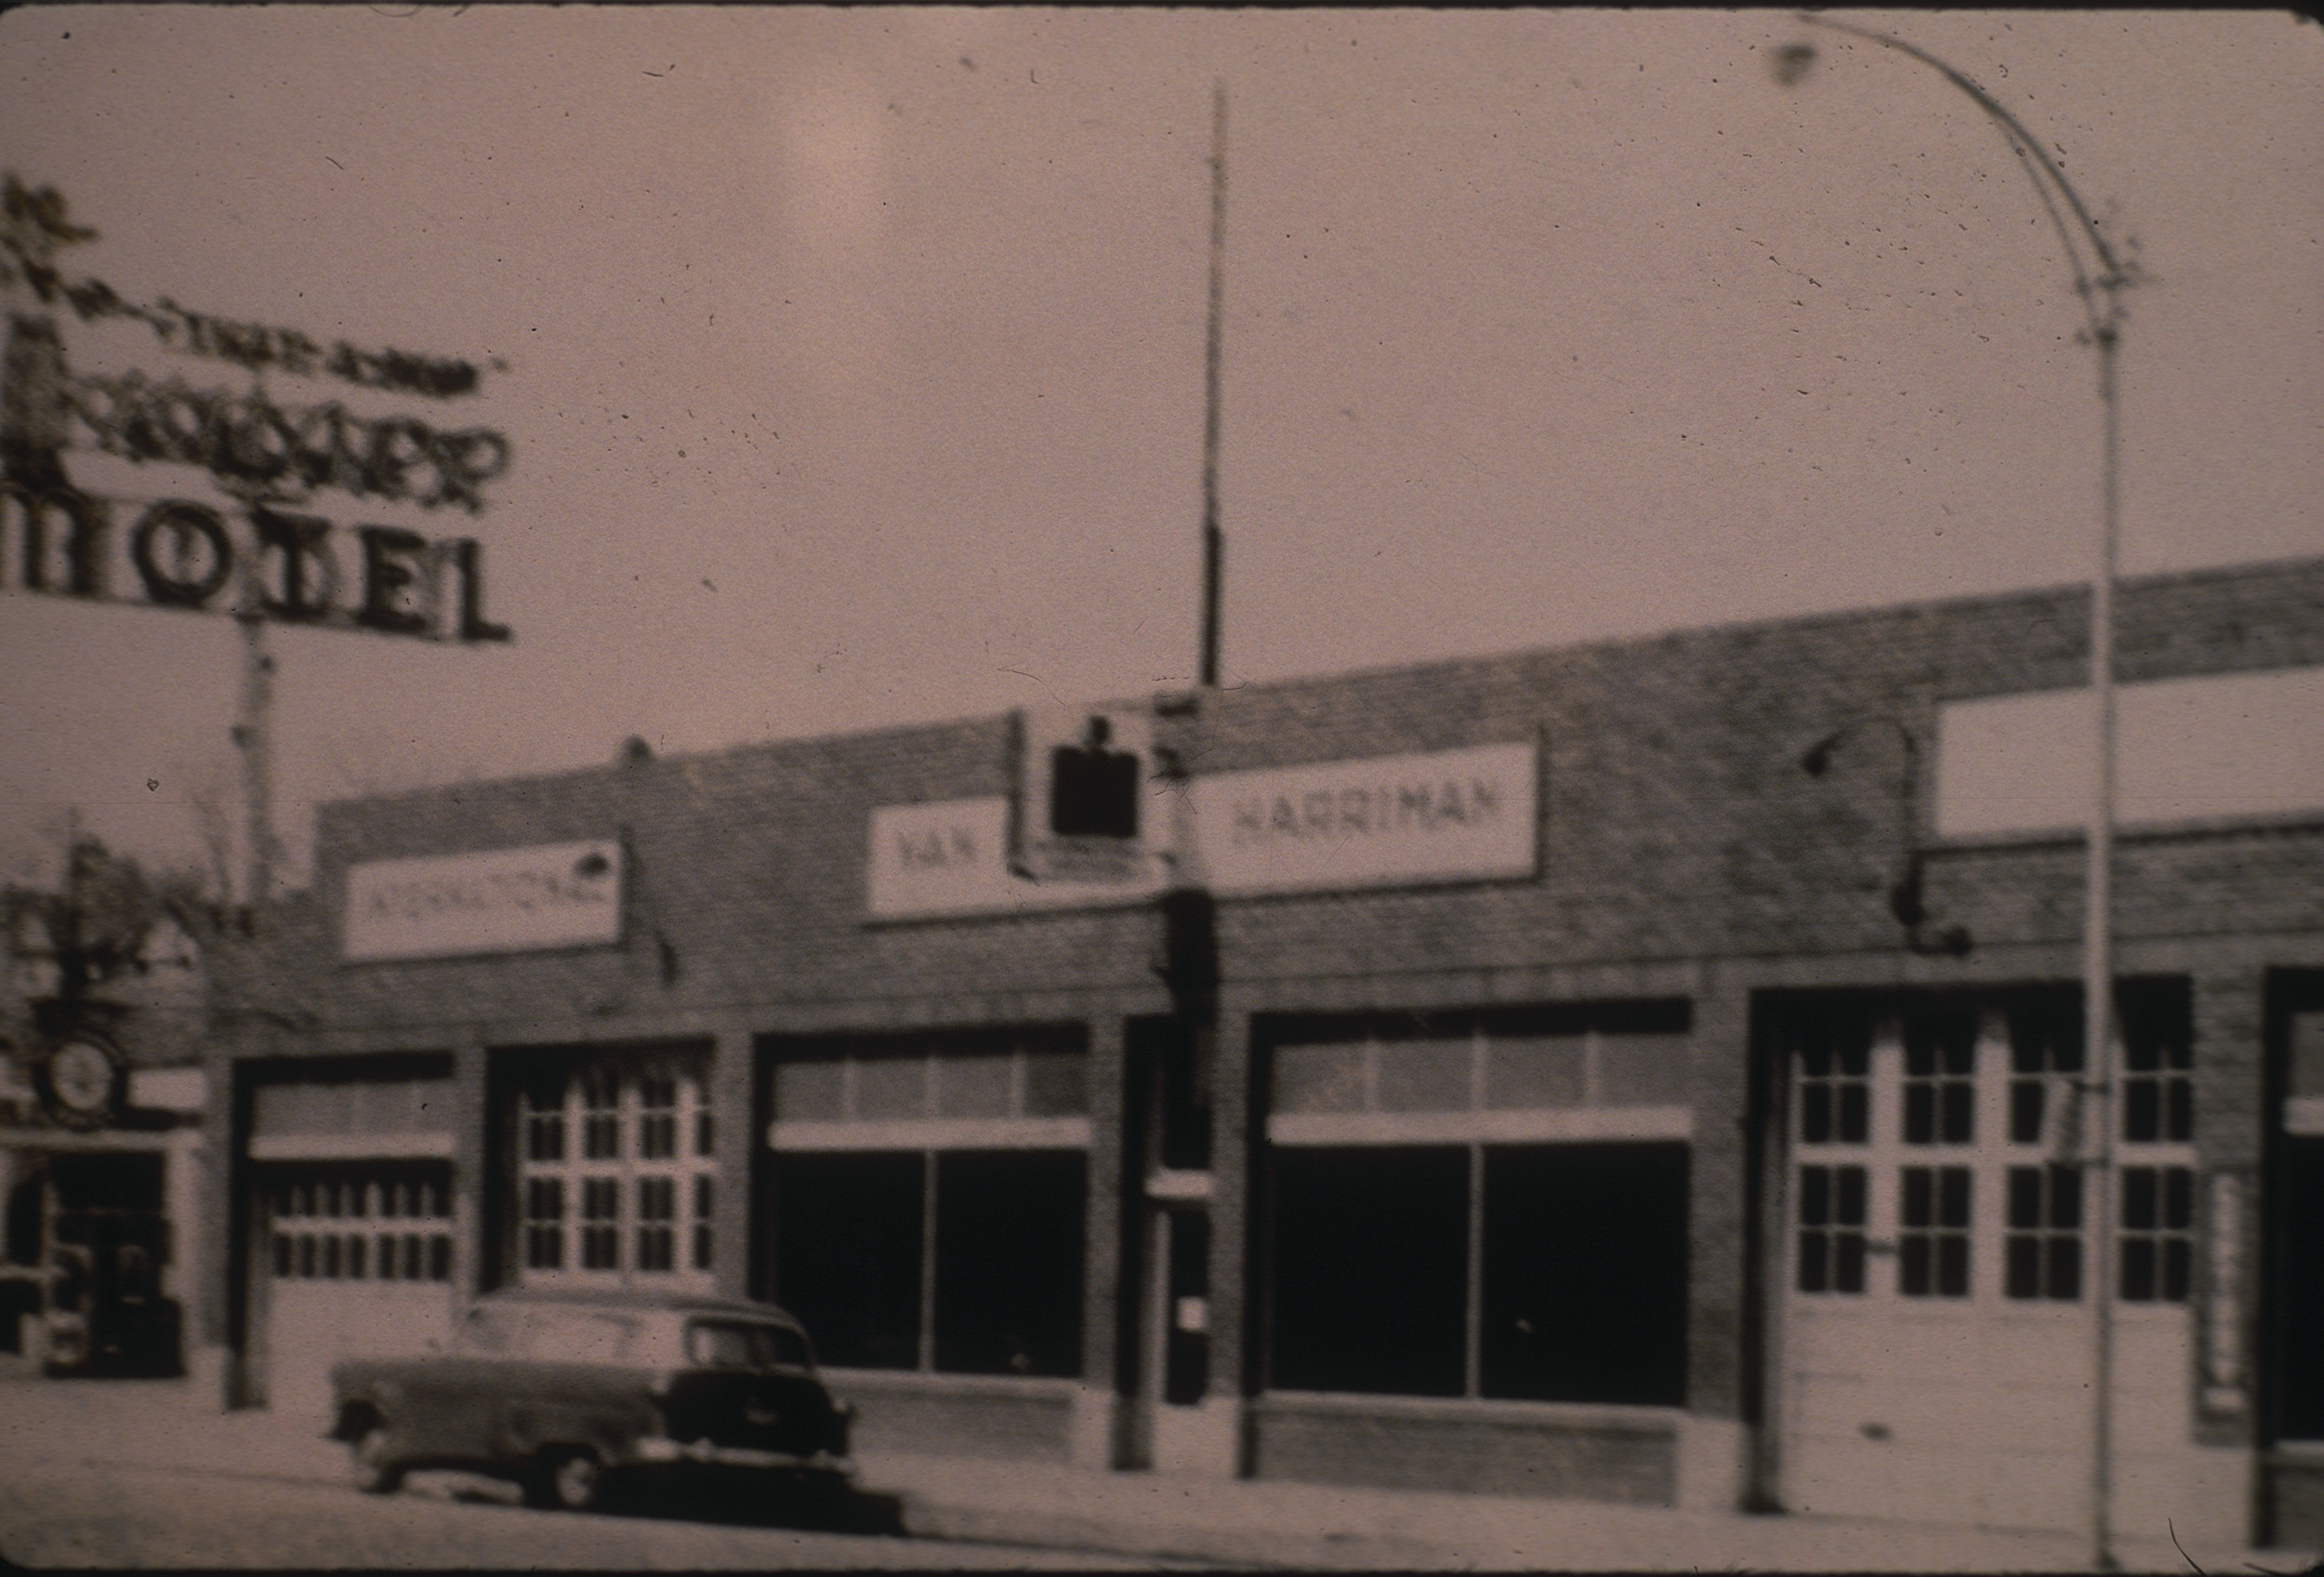 Slide of the Centre Motel, Elko, Nevada, circa 1950